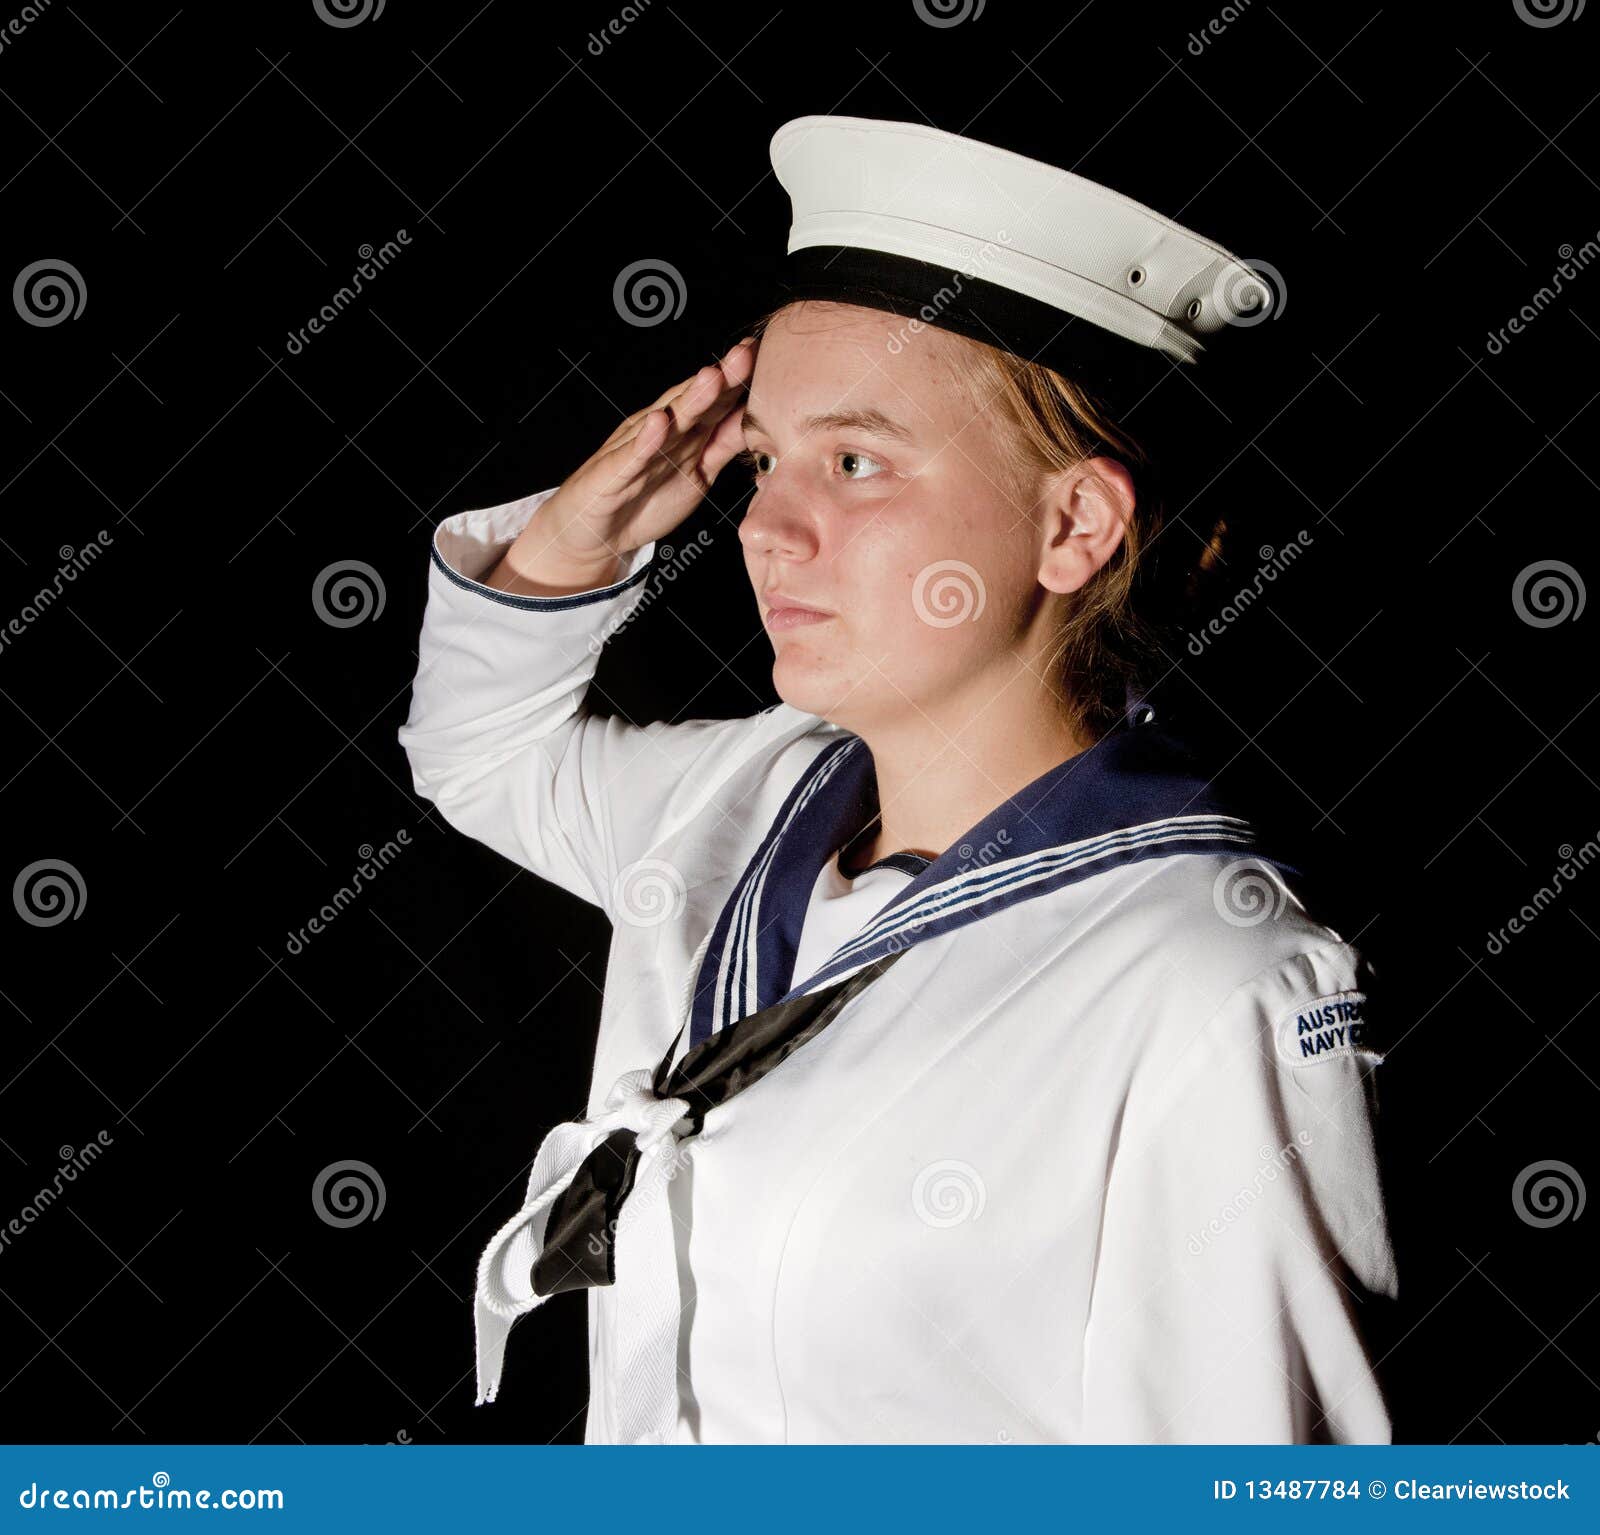 navy seaman saluting on black